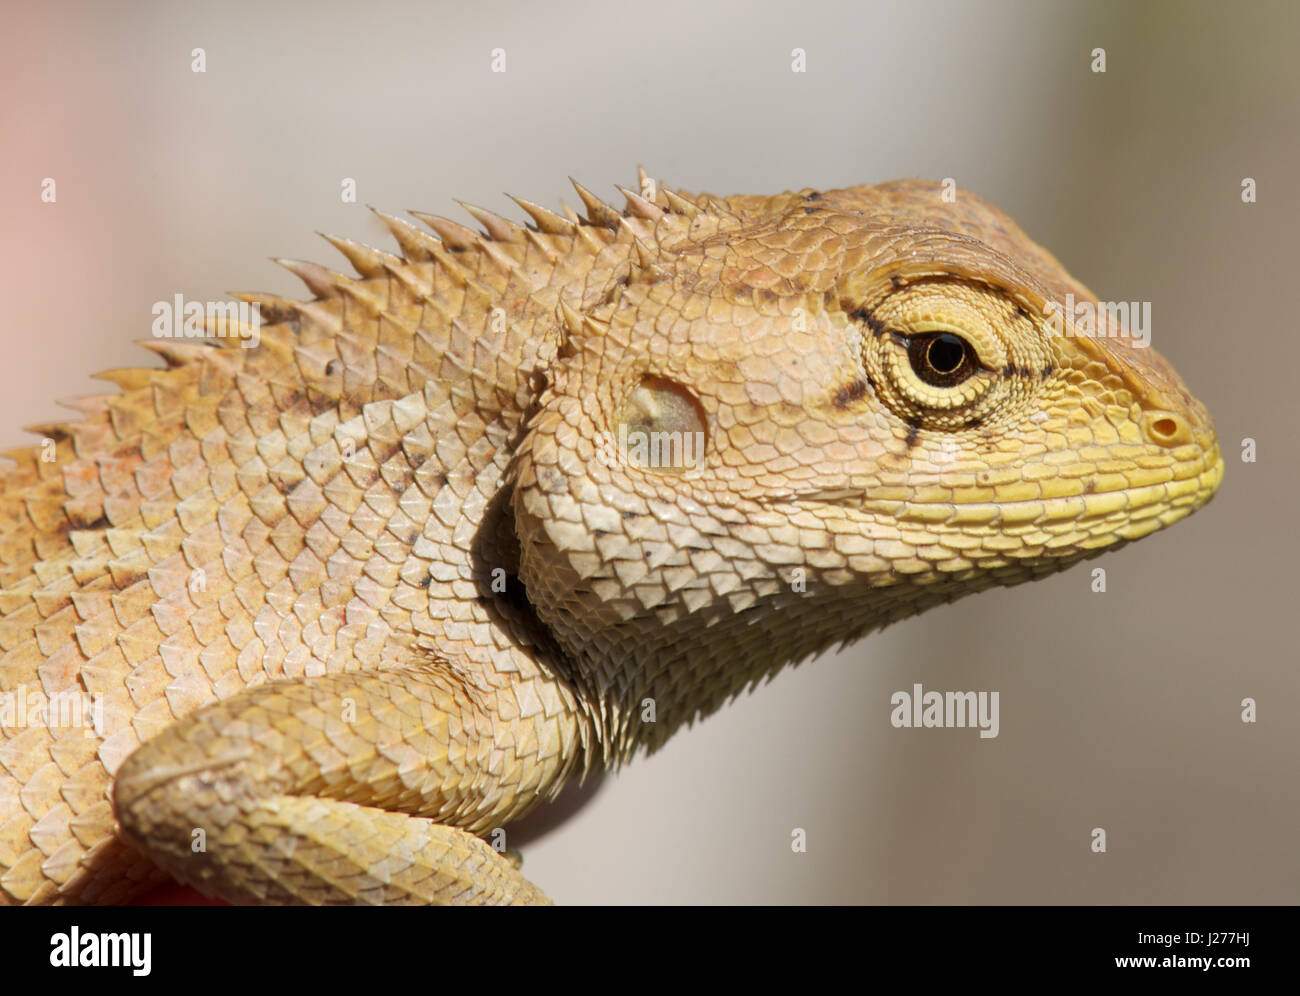 lizard vetnam Stock Photo